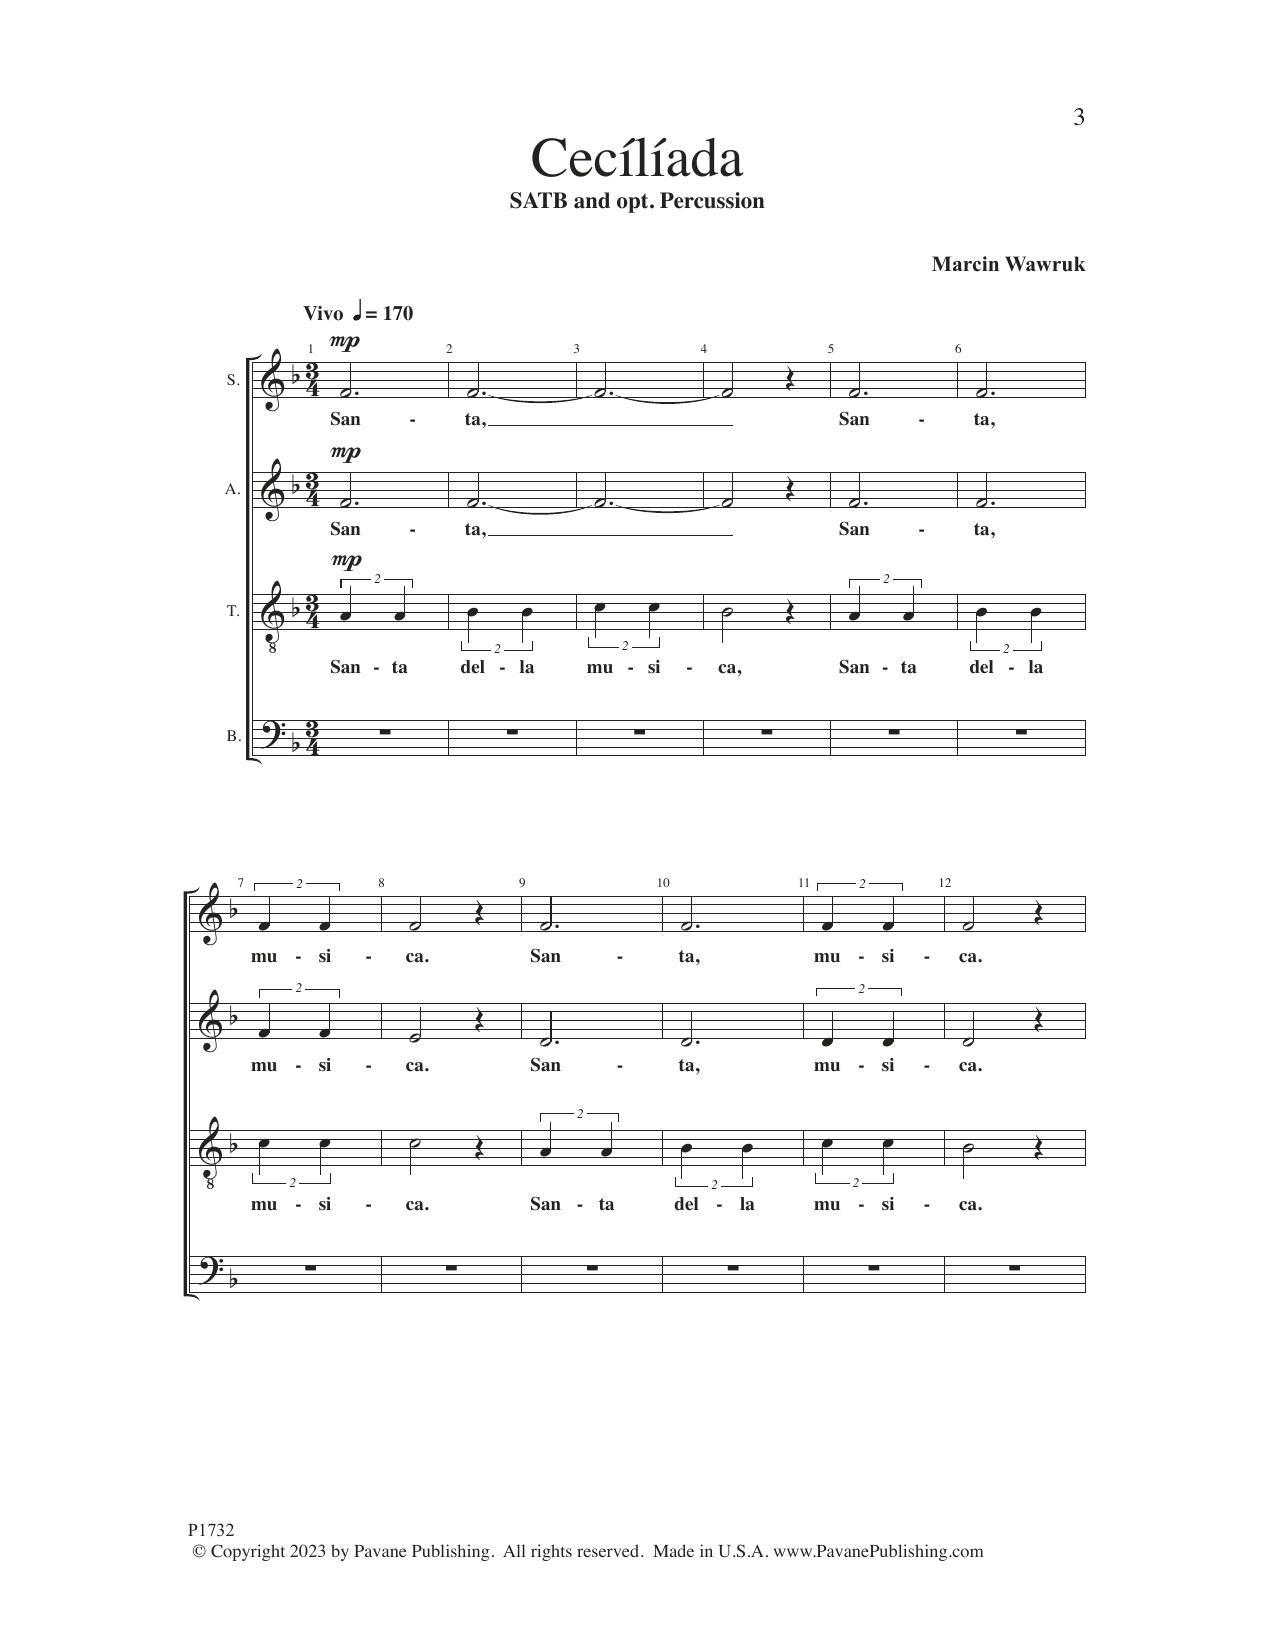 Marcin Wawruk Ceciliada Sheet Music Notes & Chords for SATB Choir - Download or Print PDF